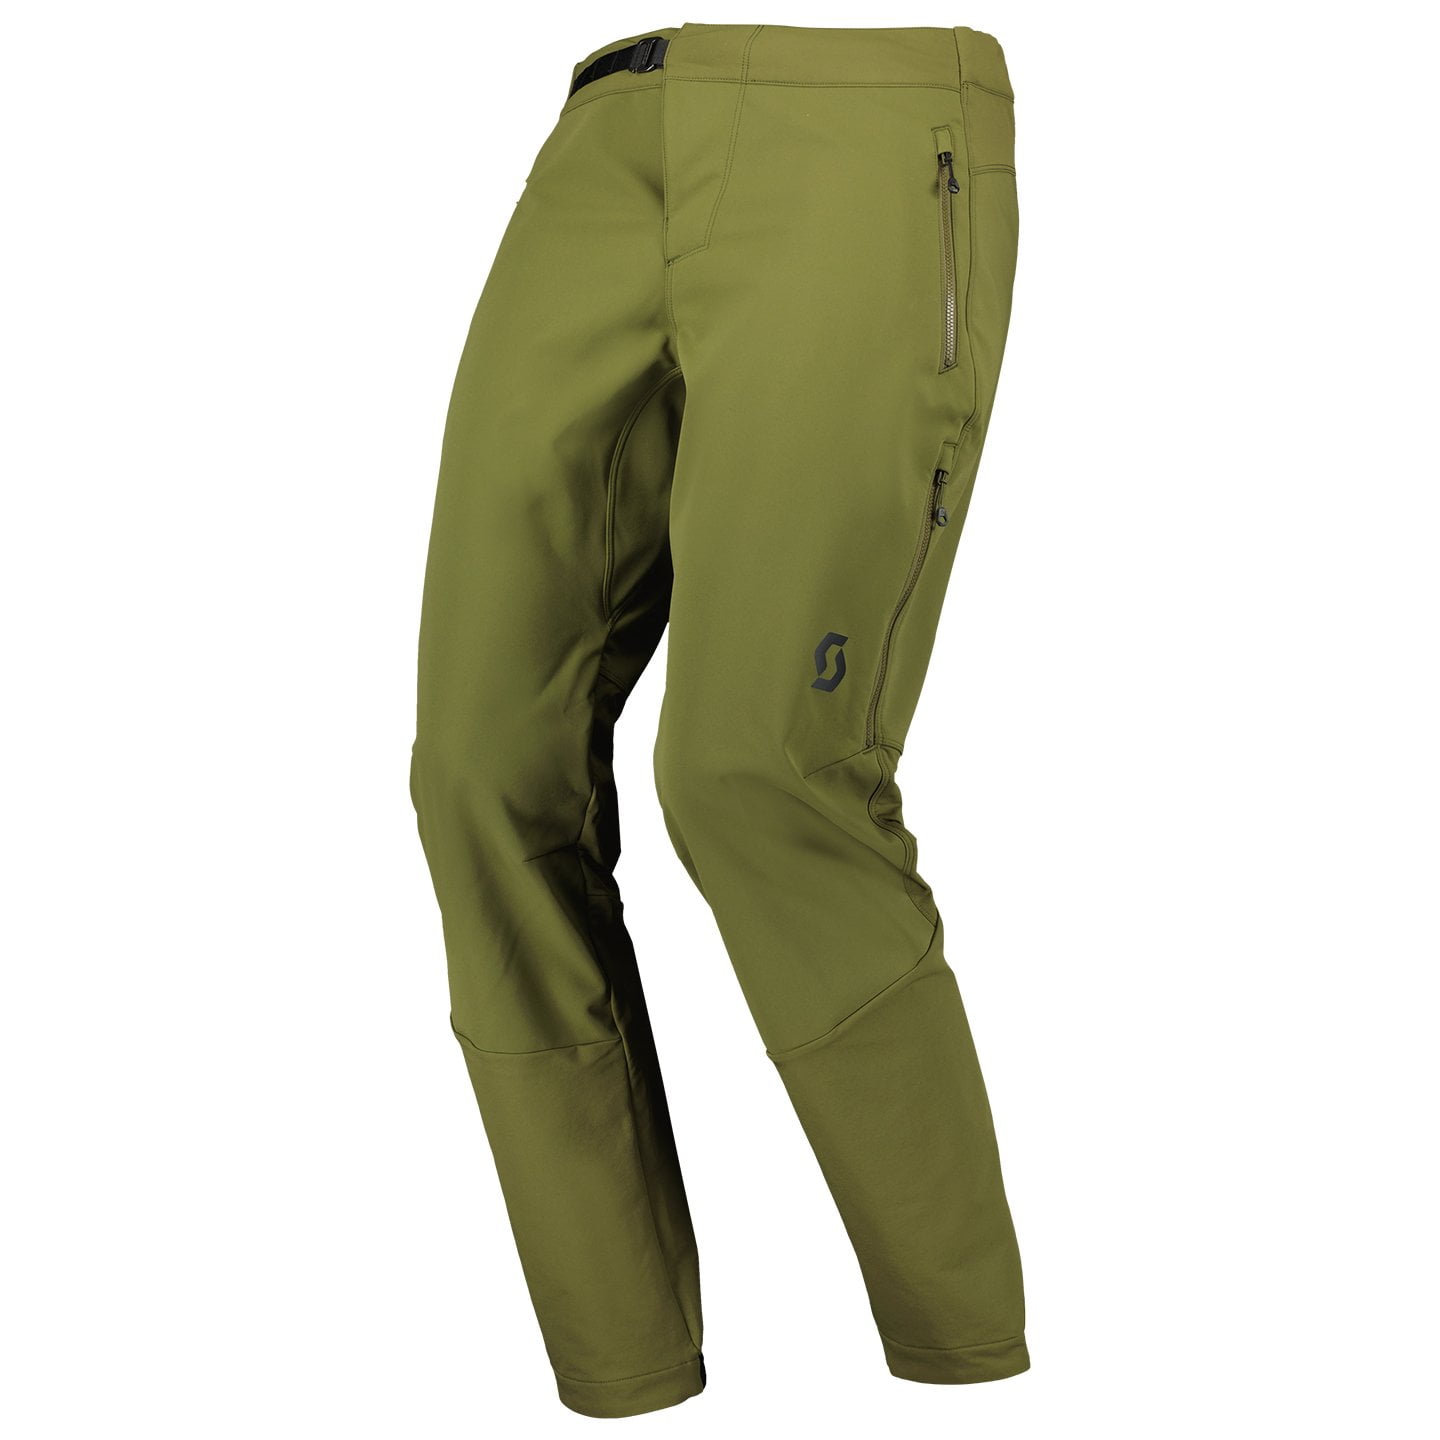 SCOTT long bike pants without pad Trail Storm Hybrid Long Bike Pants, for men, size M, Cycle trousers, Cycle clothing